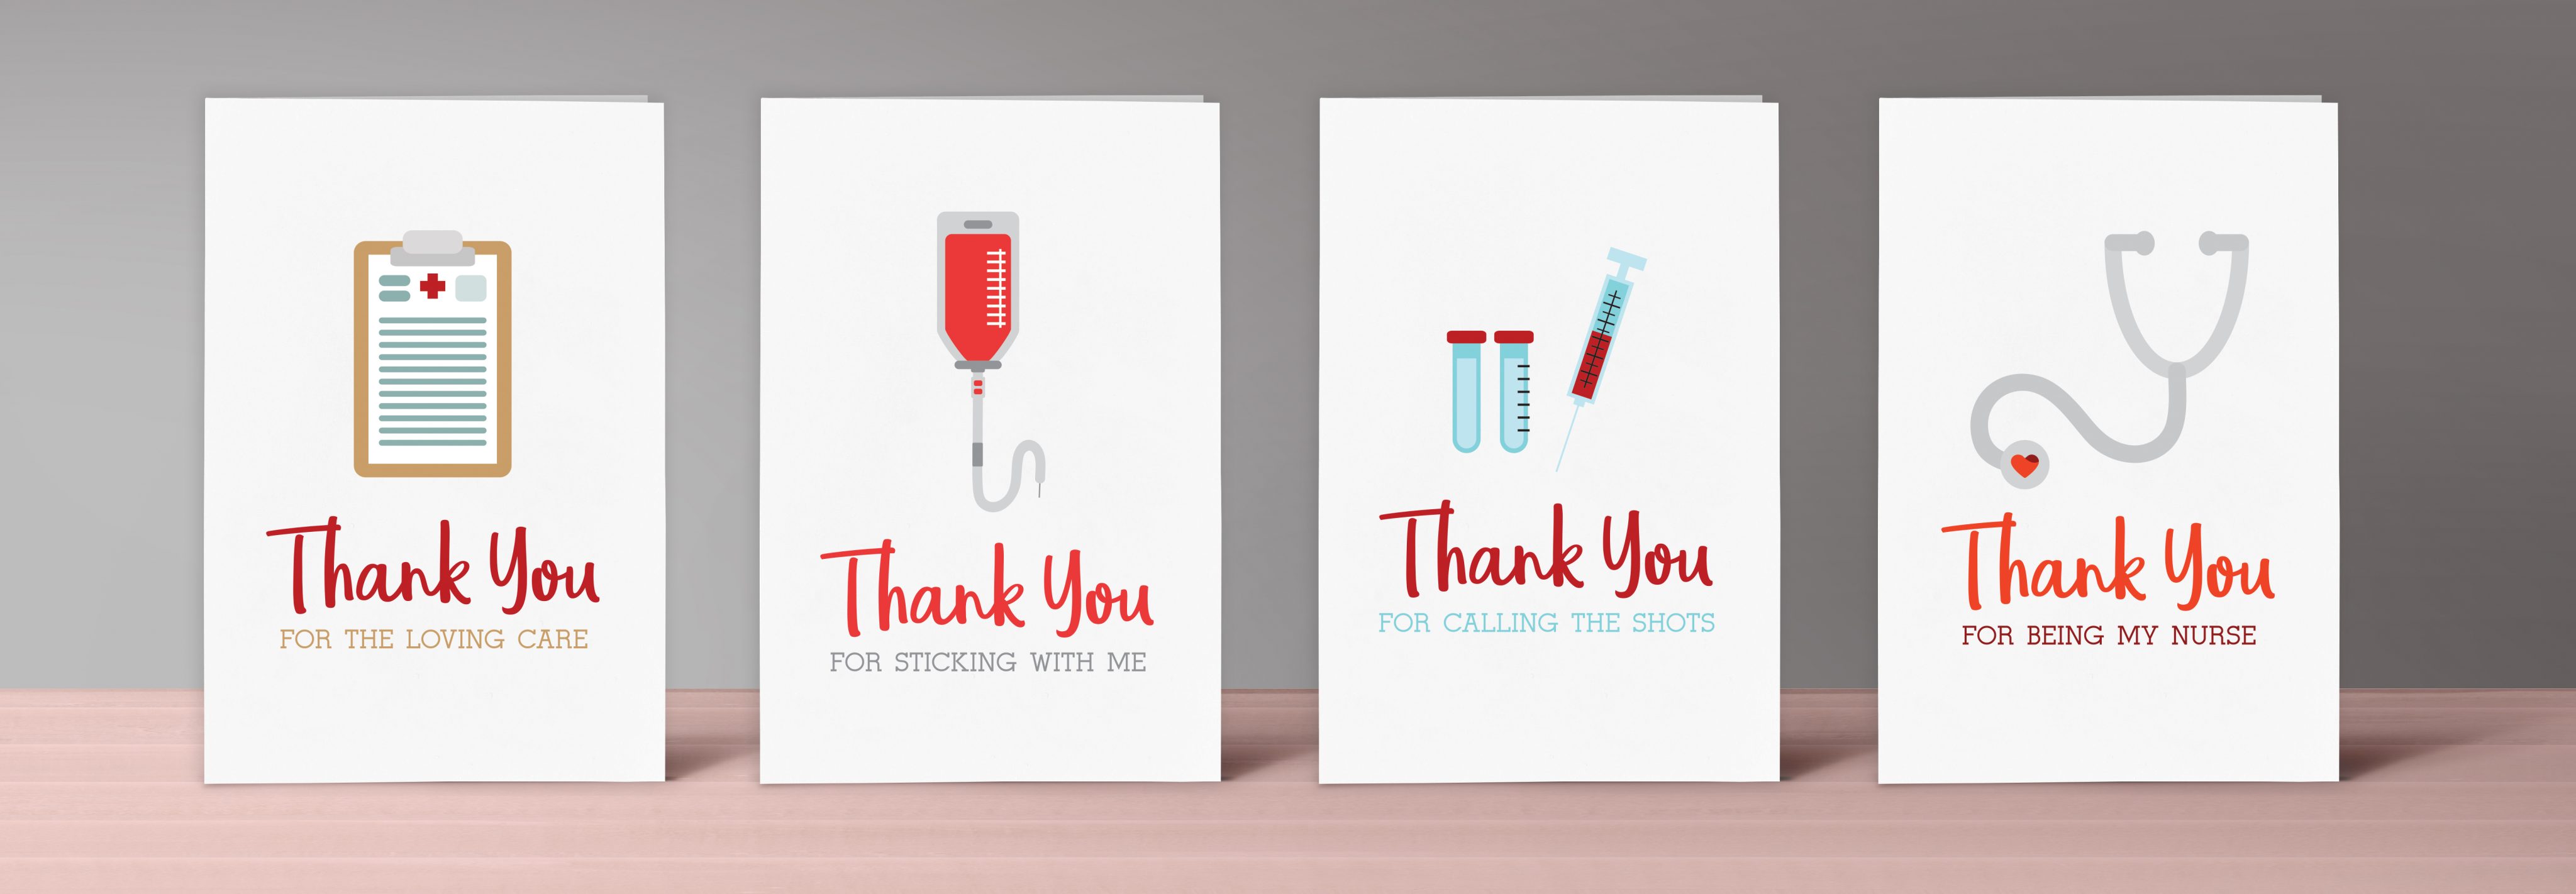 Printable Nurse Thank You Cards - Set of 4 | Nurse/Life/Gear